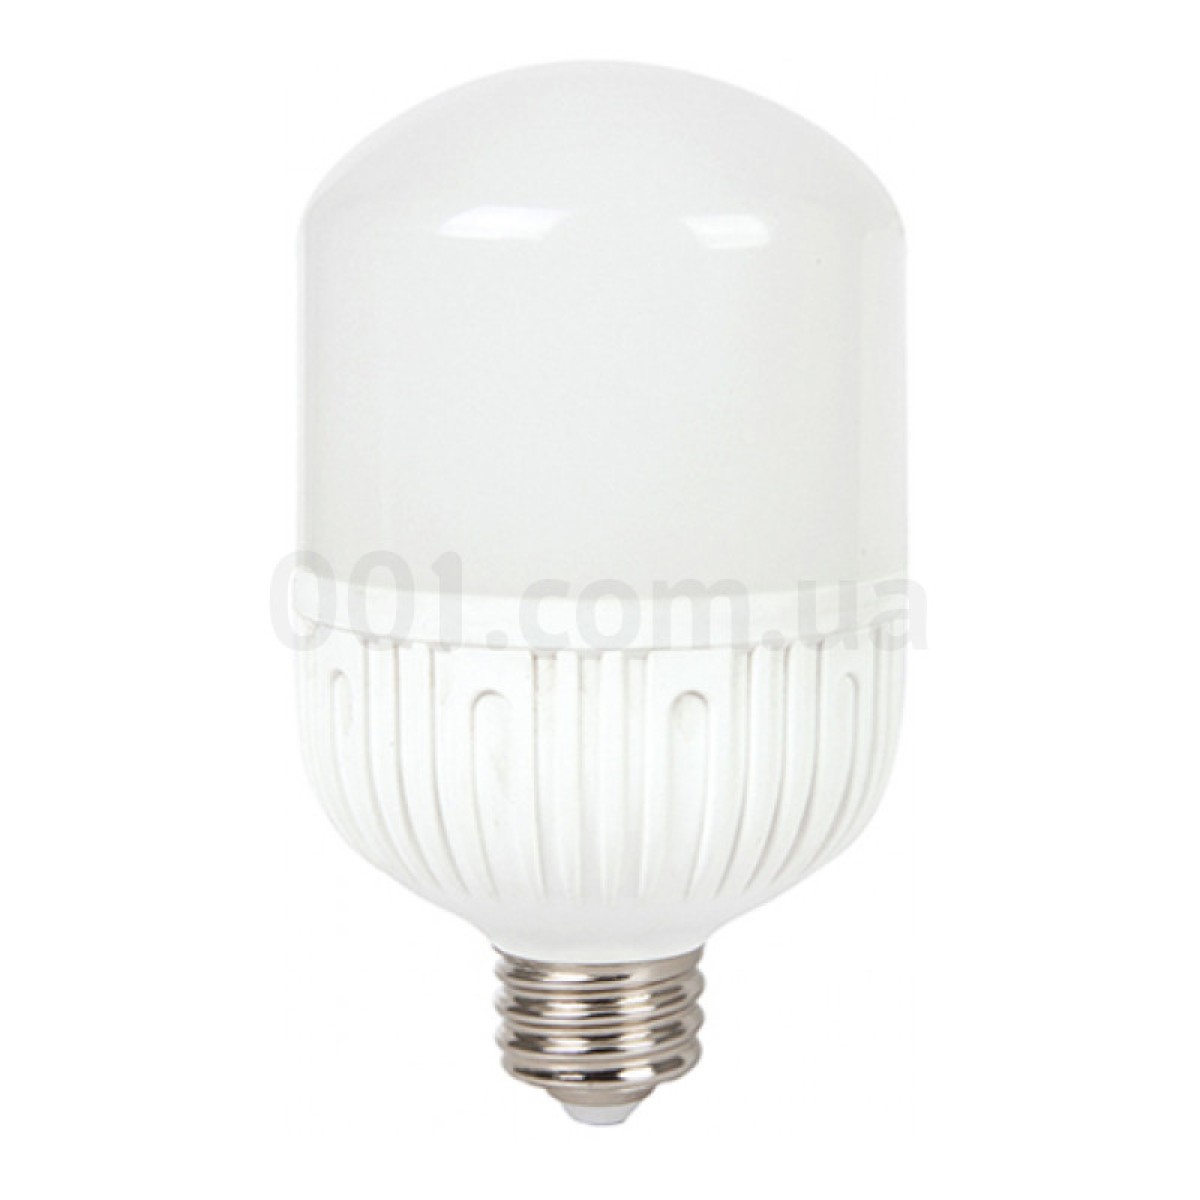 Светодиодная лампа LB-65 High-Wattage 30Вт 6400K E27-E40, Feron 256_256.jpg